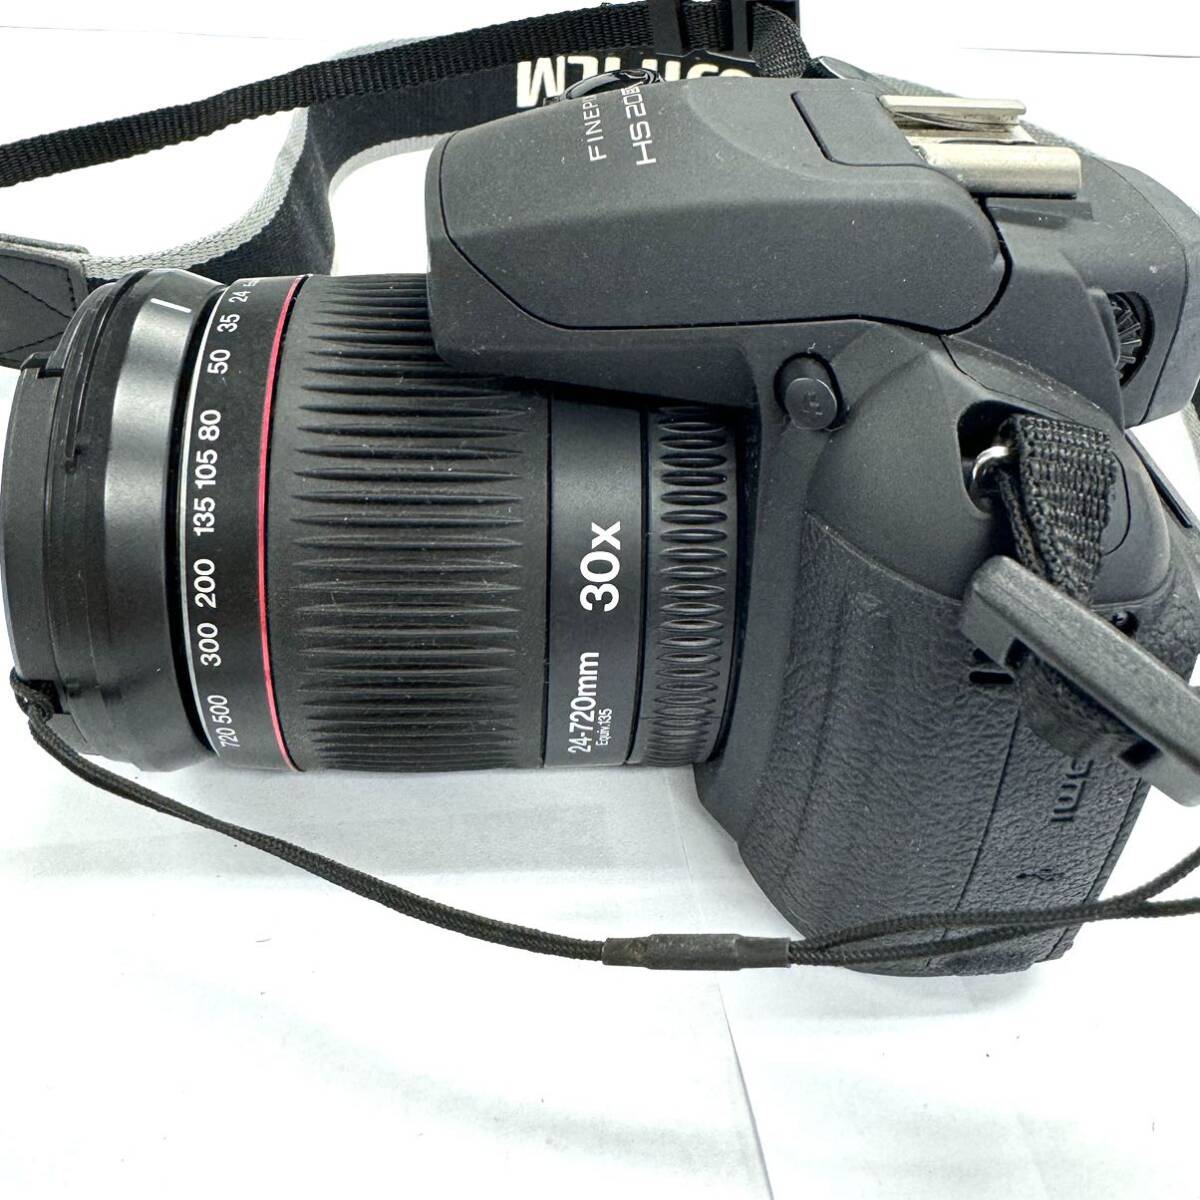 A0008 カメラ デジタルカメラ FUJIFILM 1A001459 SUPER EBC FUJINON LENS 30×ZOOM f＝4.2-126 1:2:8-5.6 58mm ジャンク品 訳あり 中古の画像10